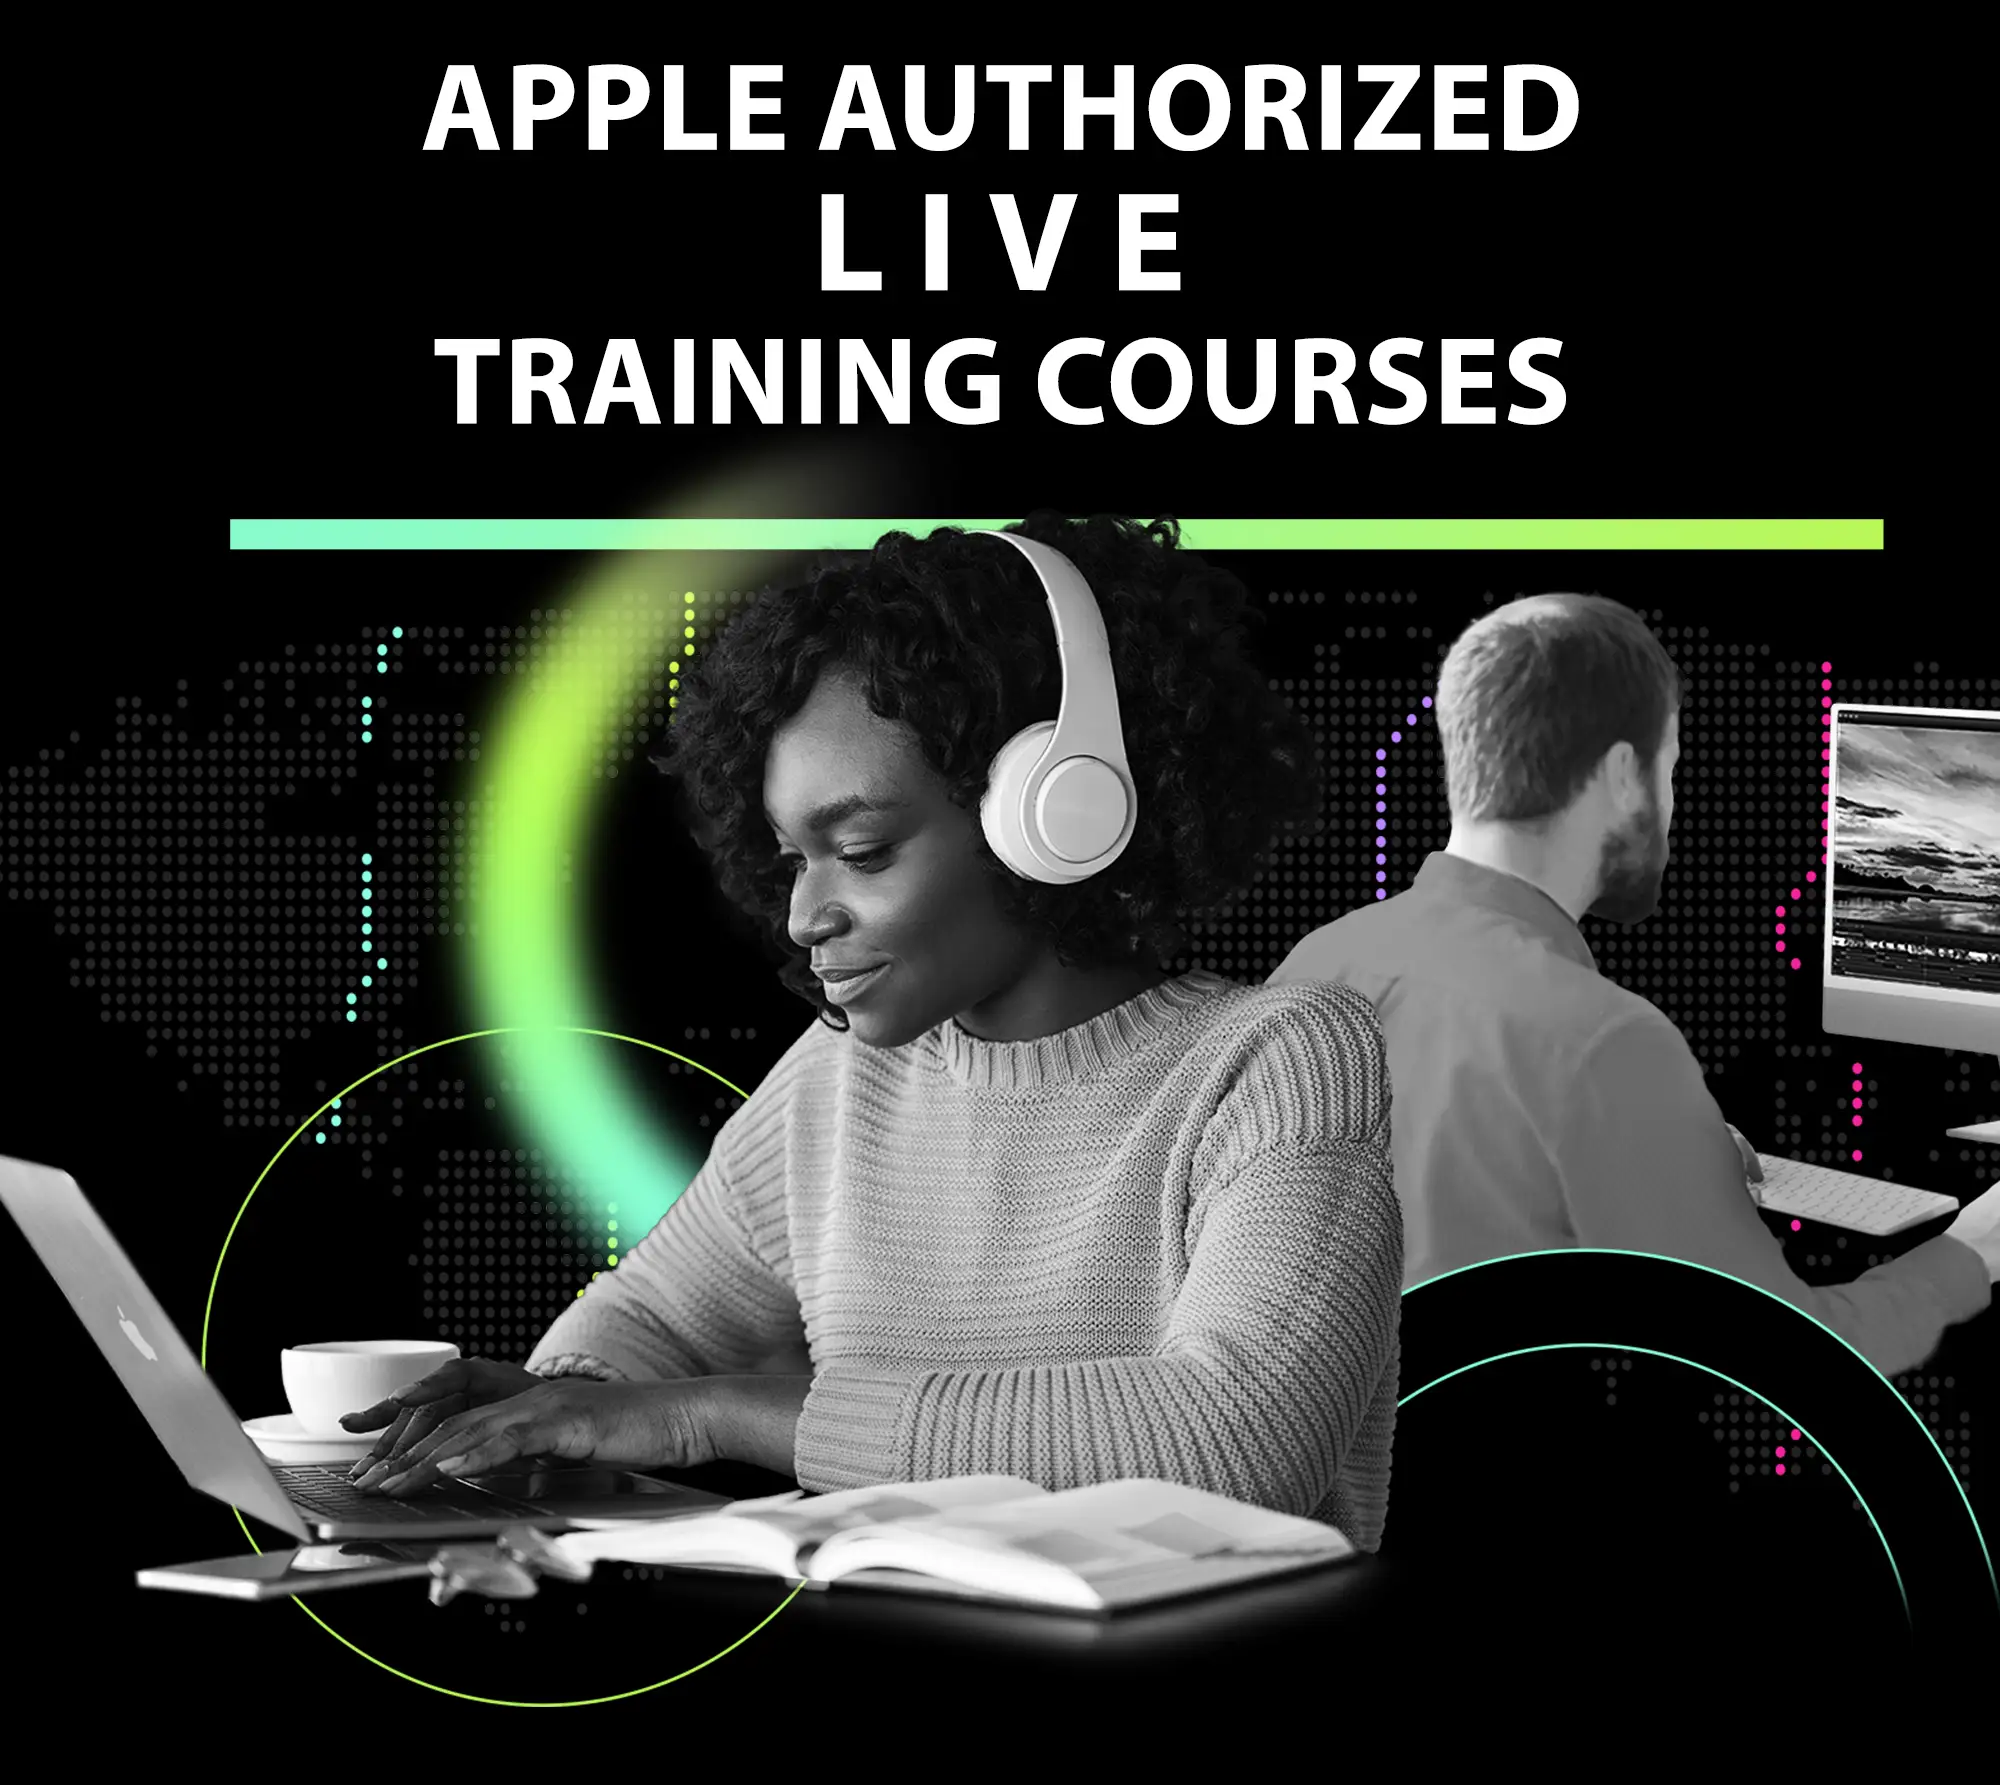 Apple Authorized Live Training Courses - image collage